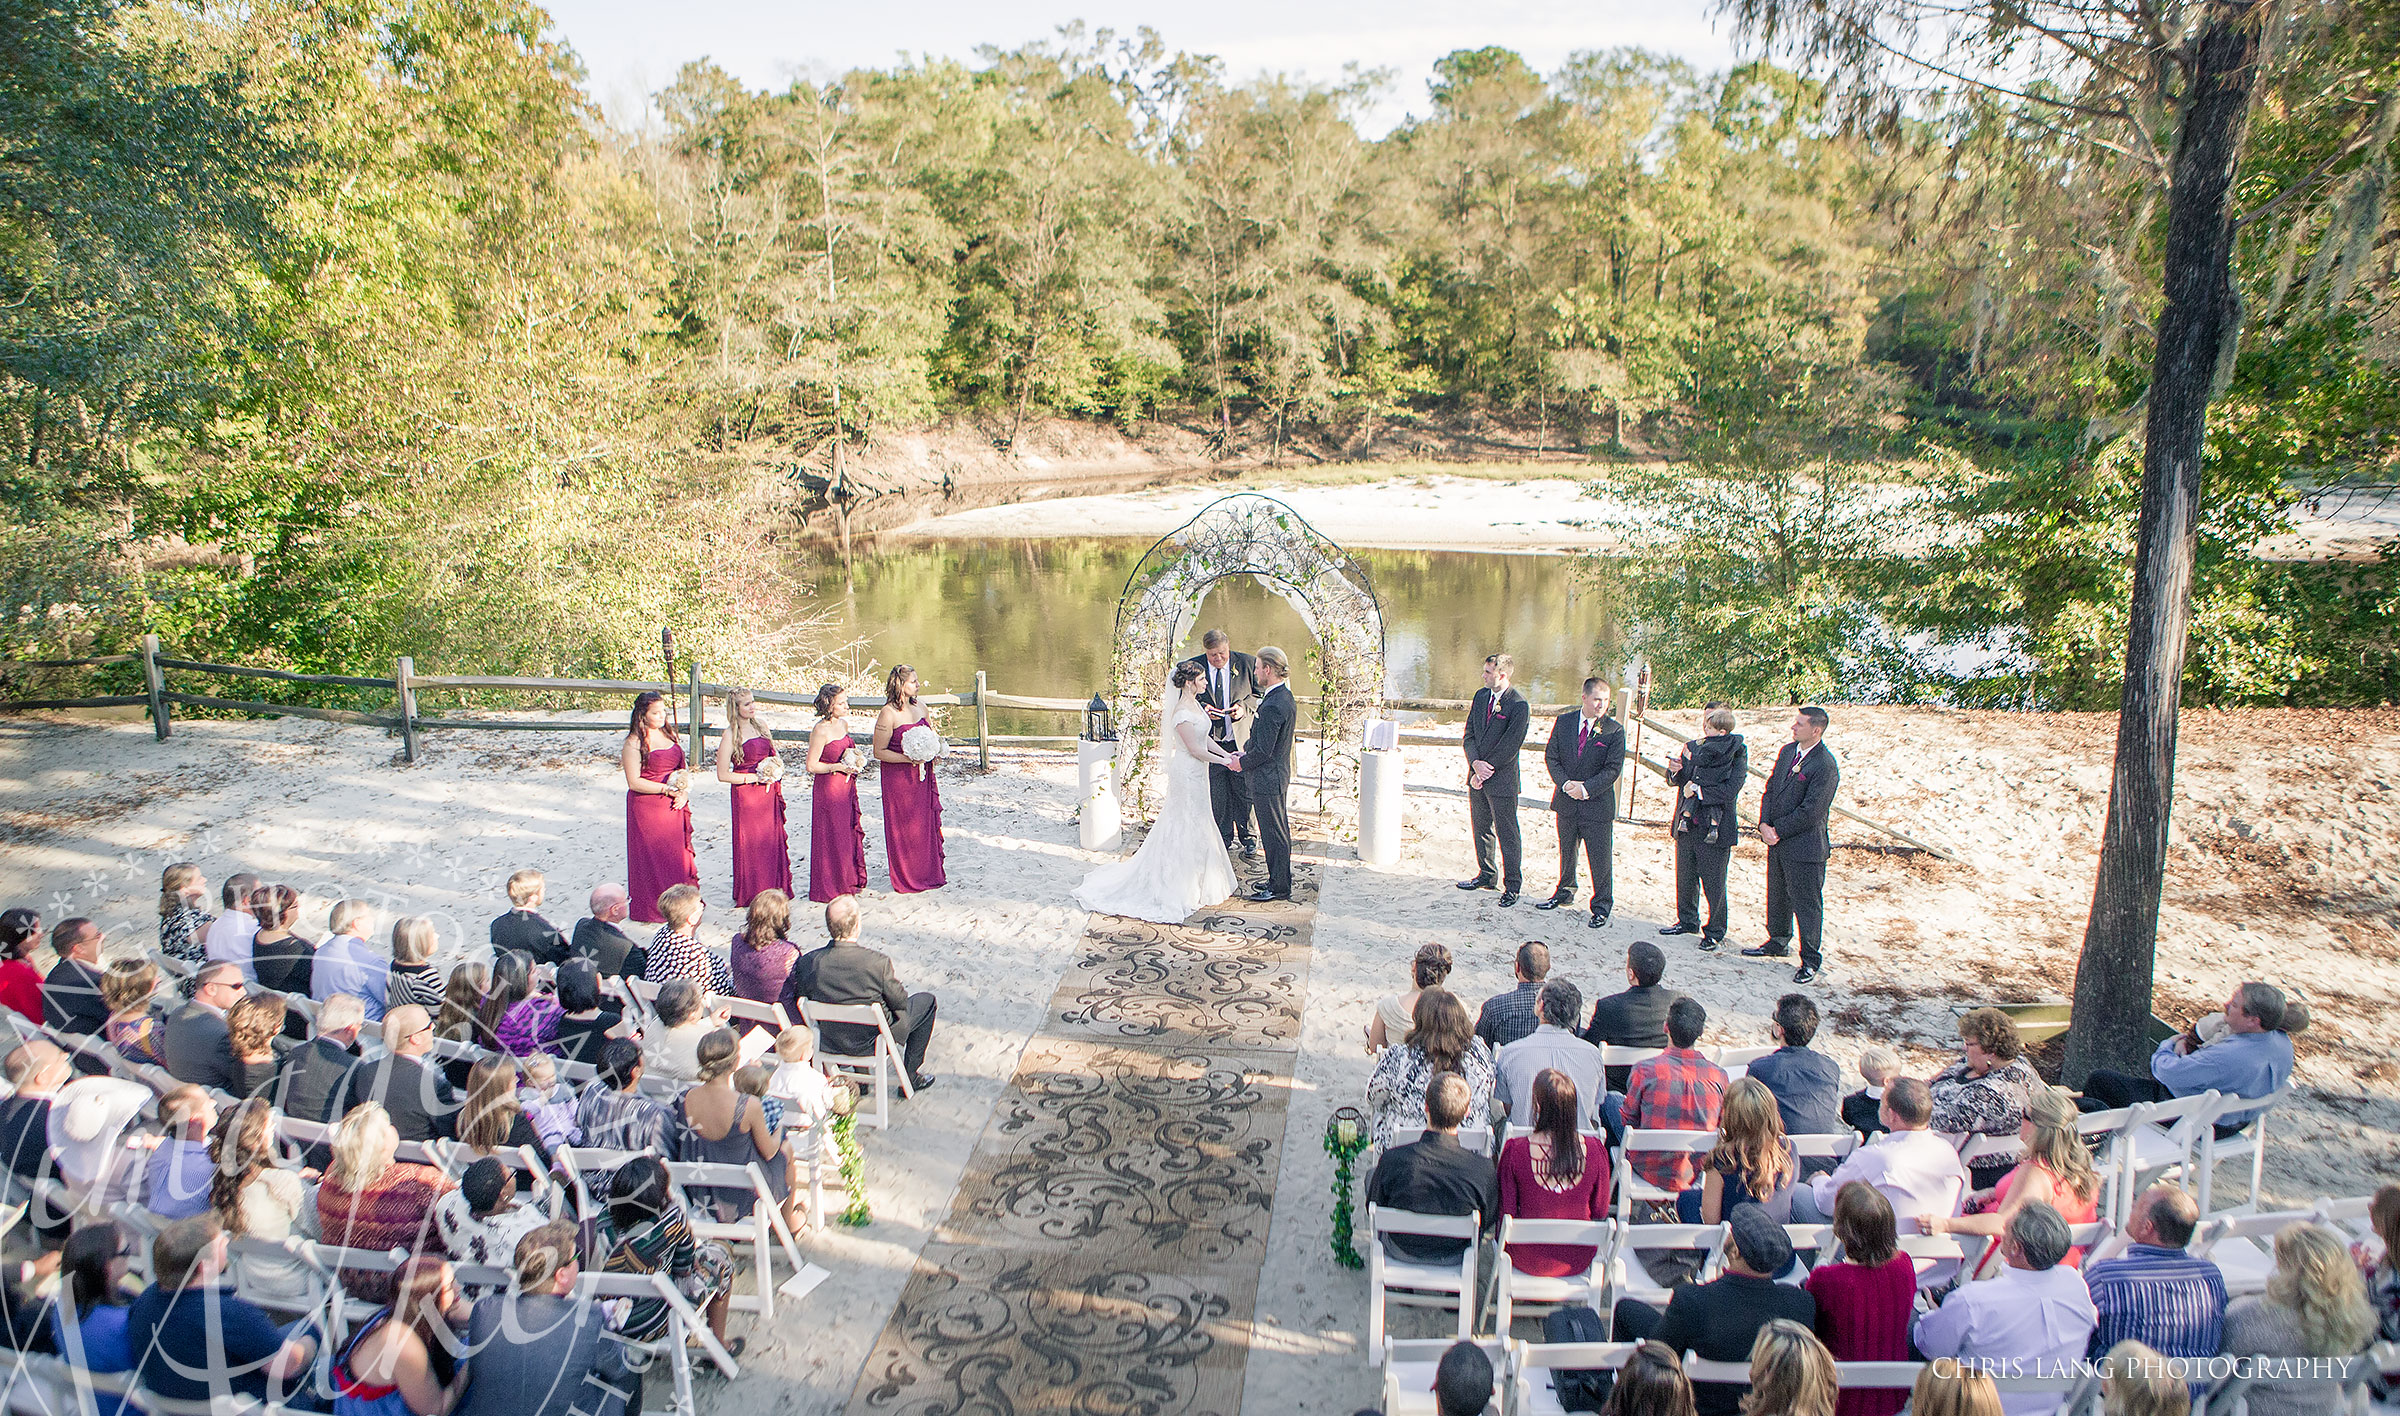 RIver Landing River Lodge - Wedding Venue - Wedding Phootography - River Landing Photographers